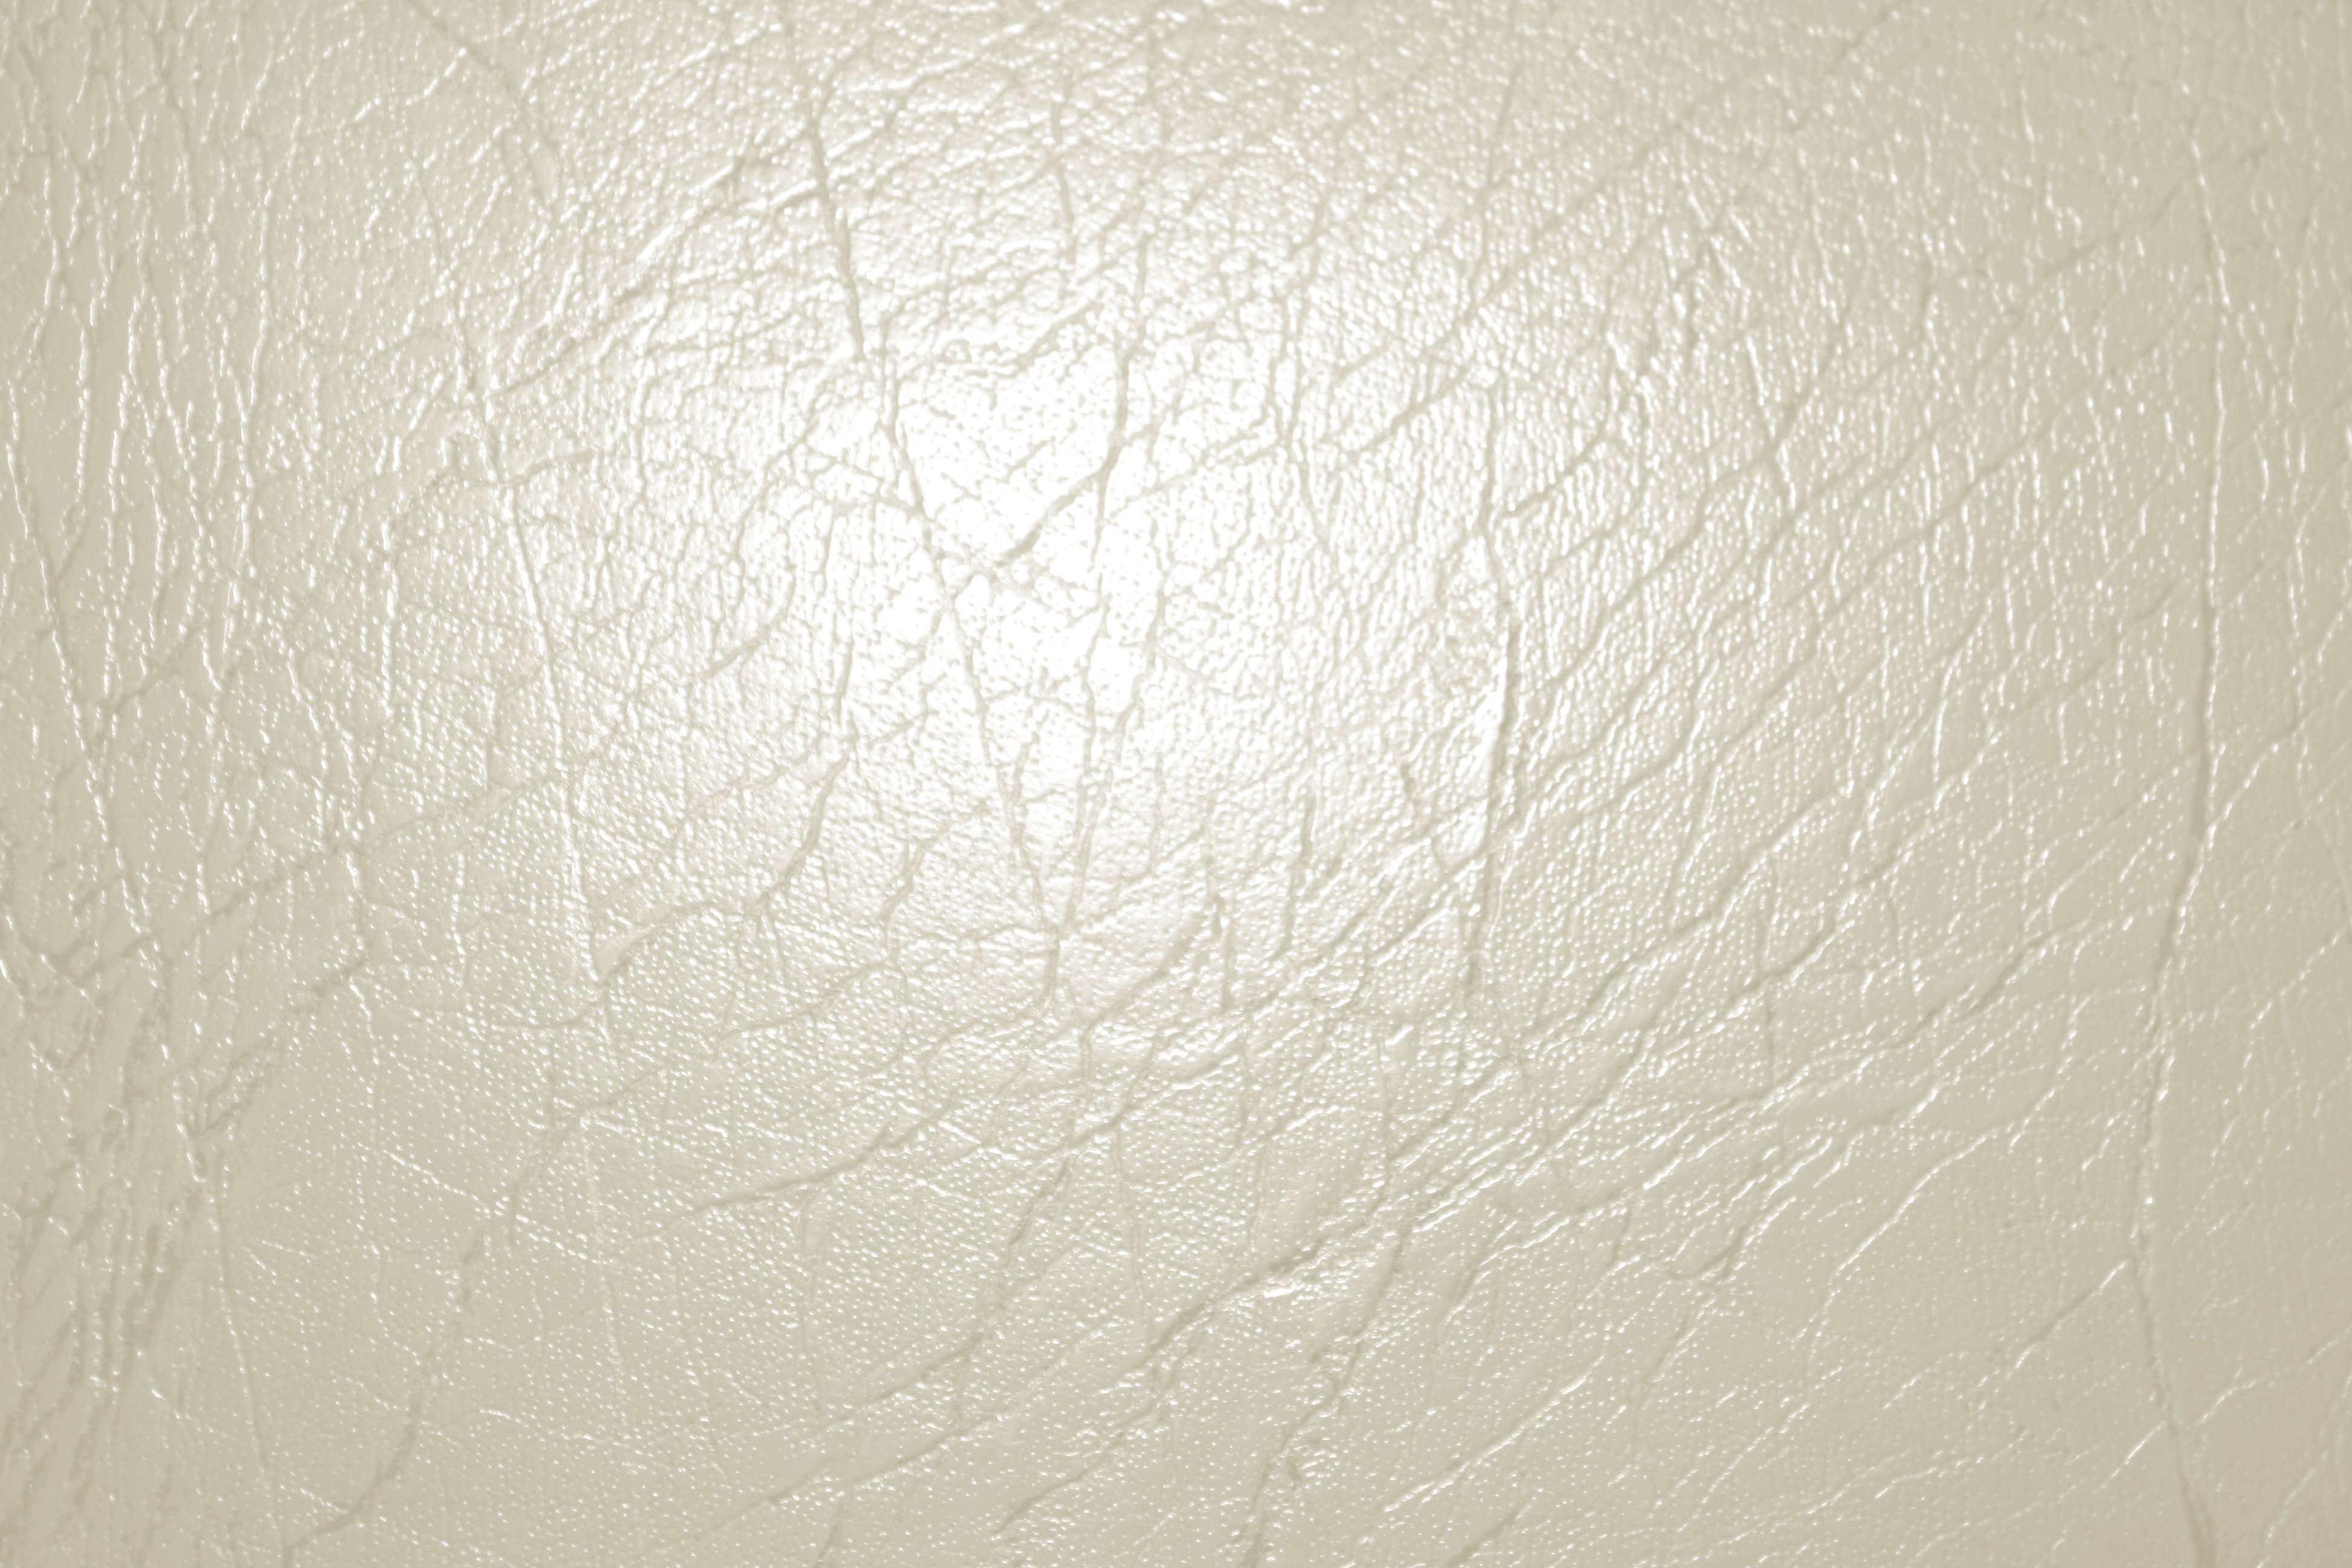 White leather (Texture)